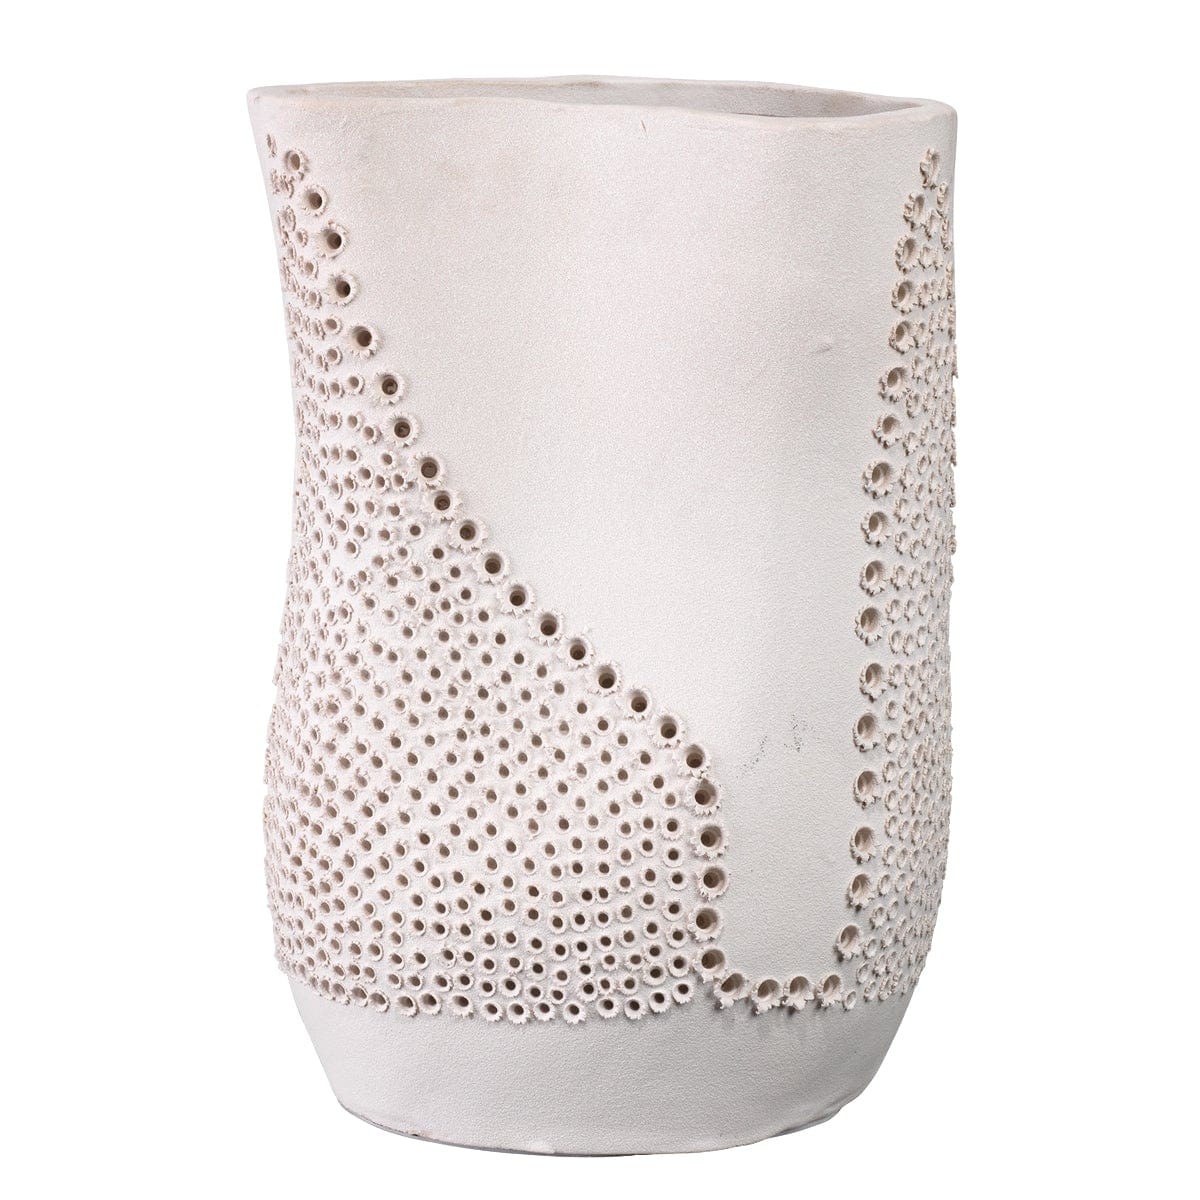 Jamie Young Co. January NEW Moonrise Vase Vases